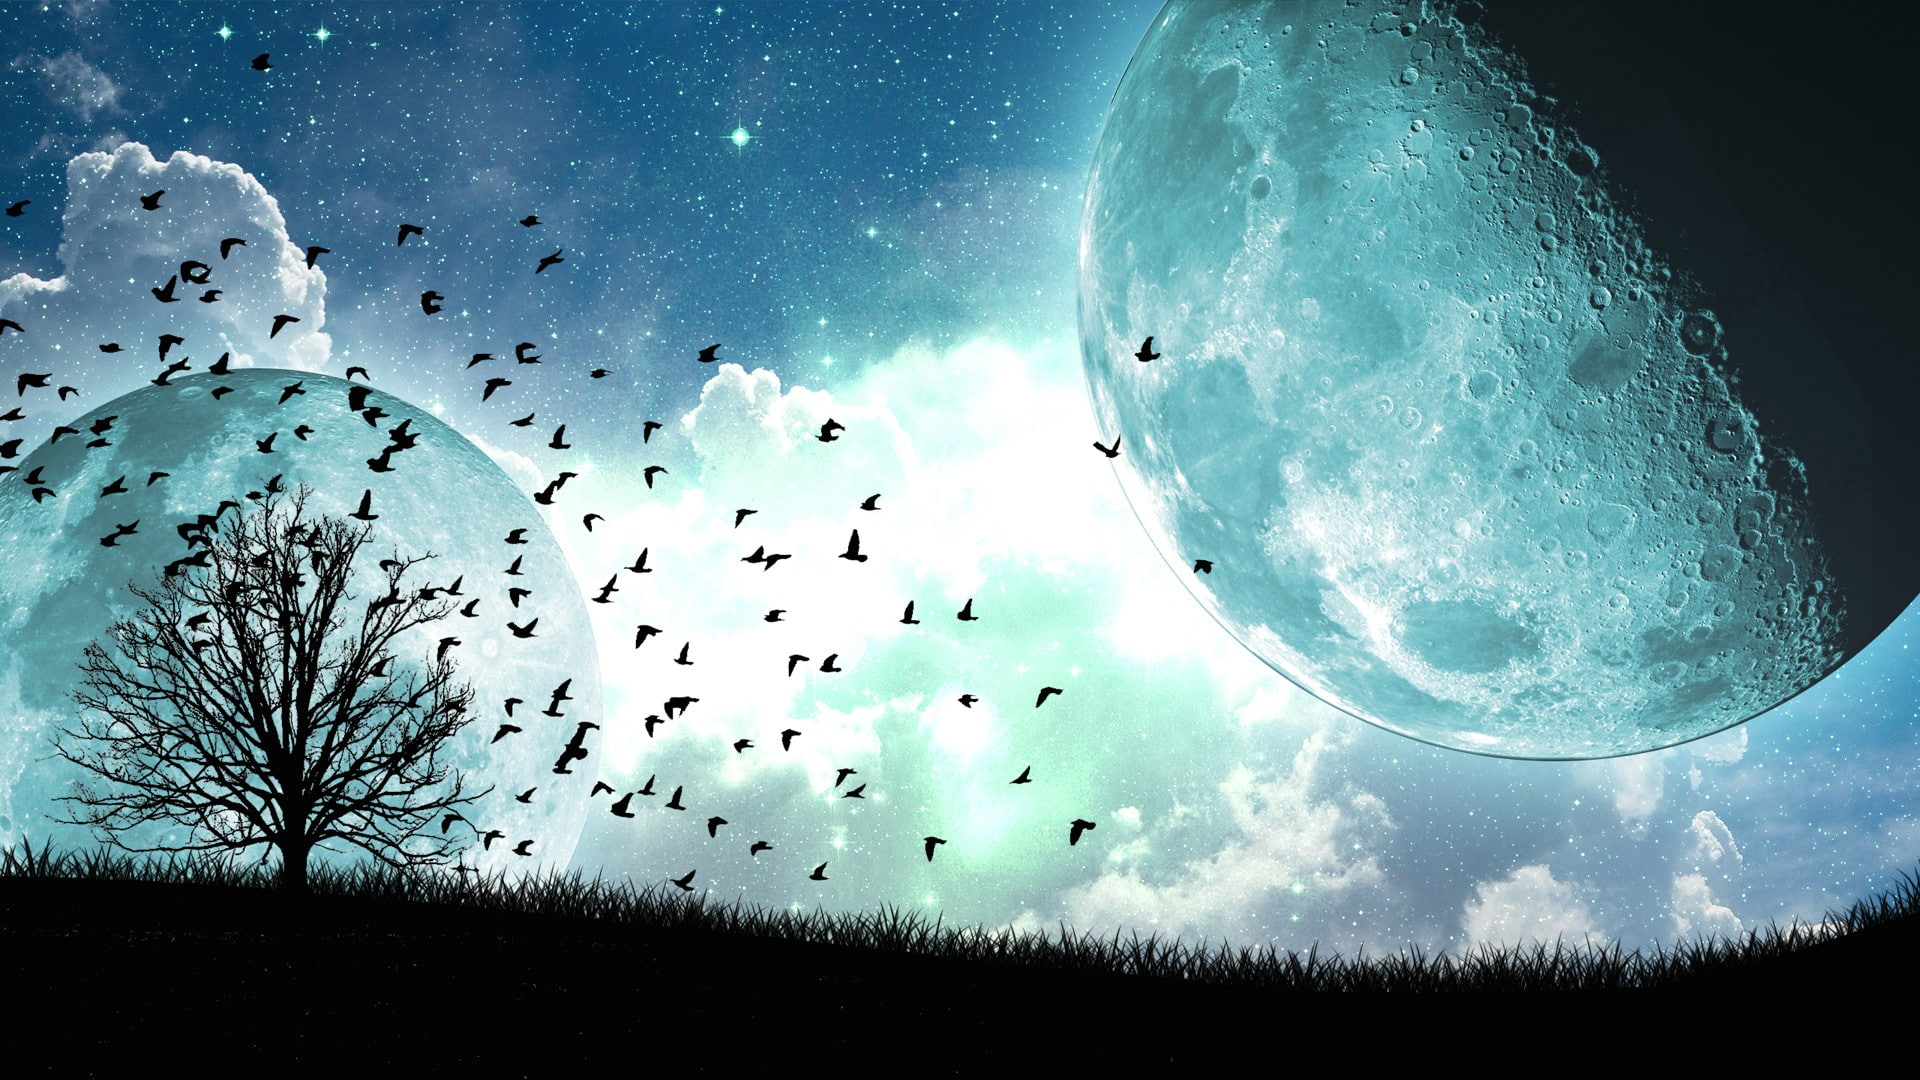 clouds, Moon, night, stars, trees, birds, artwork